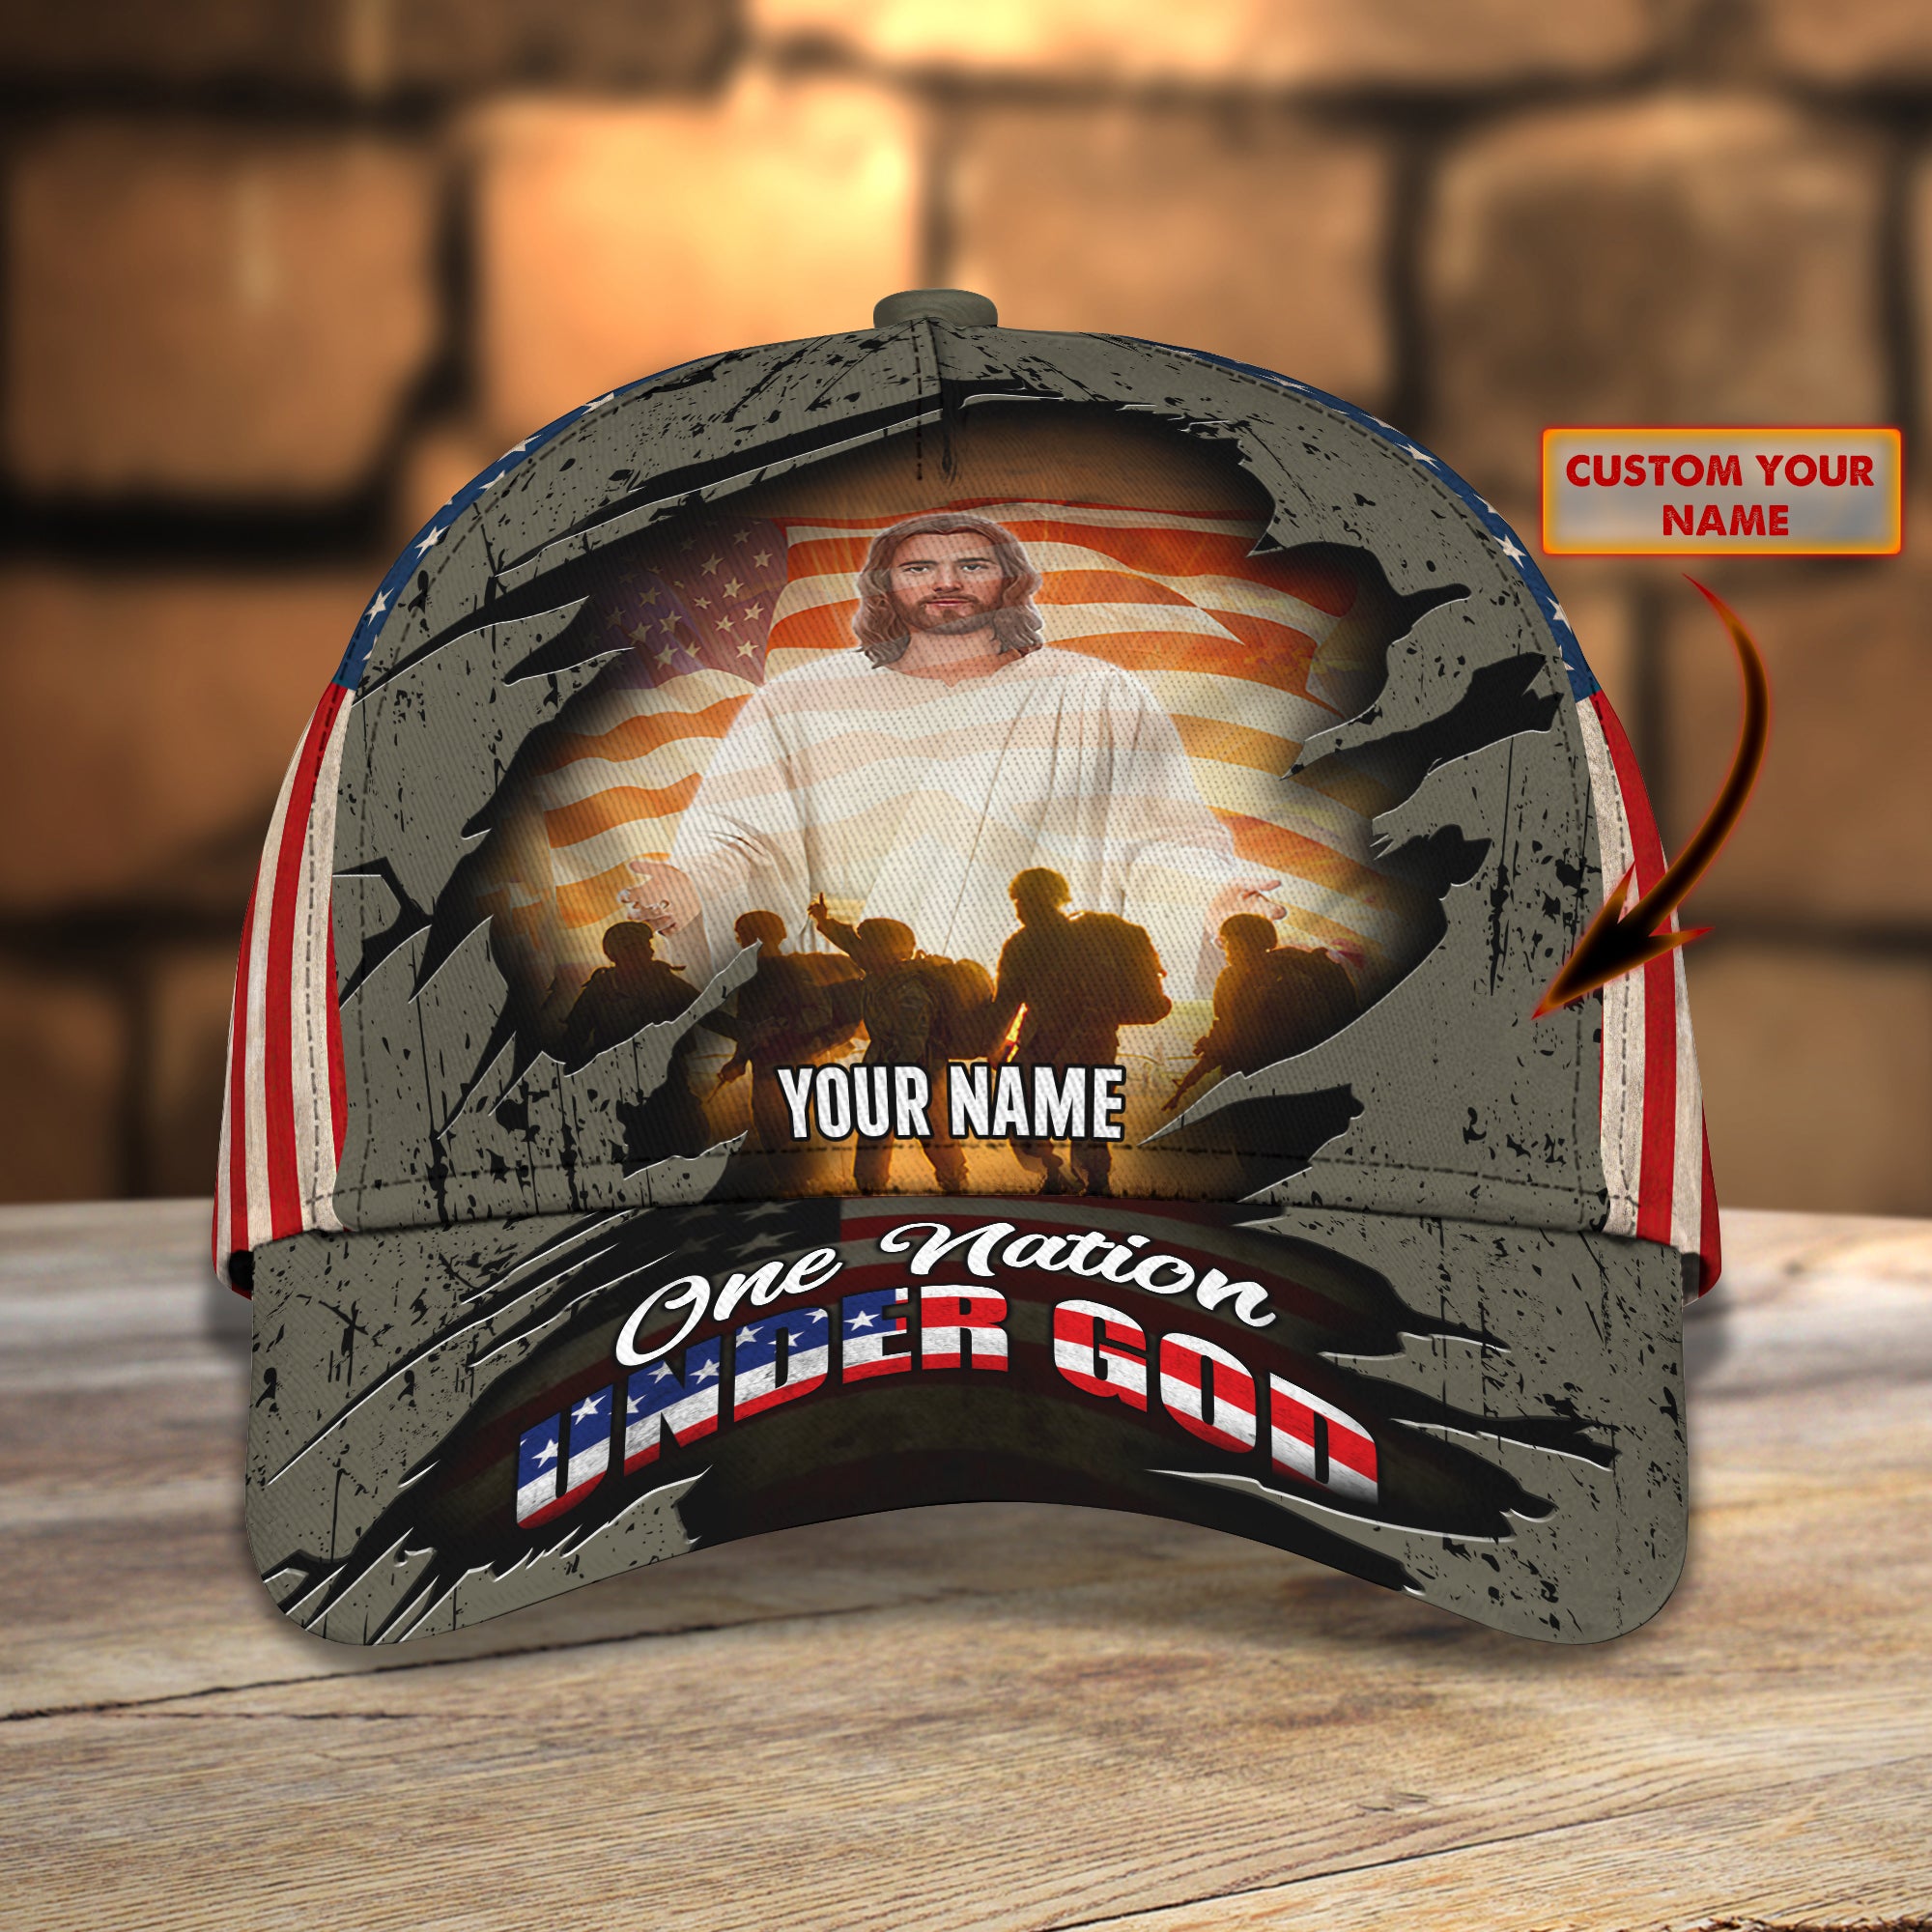 Veteran - One Nation Under God - Personalized Name Cap C84 - Lta98